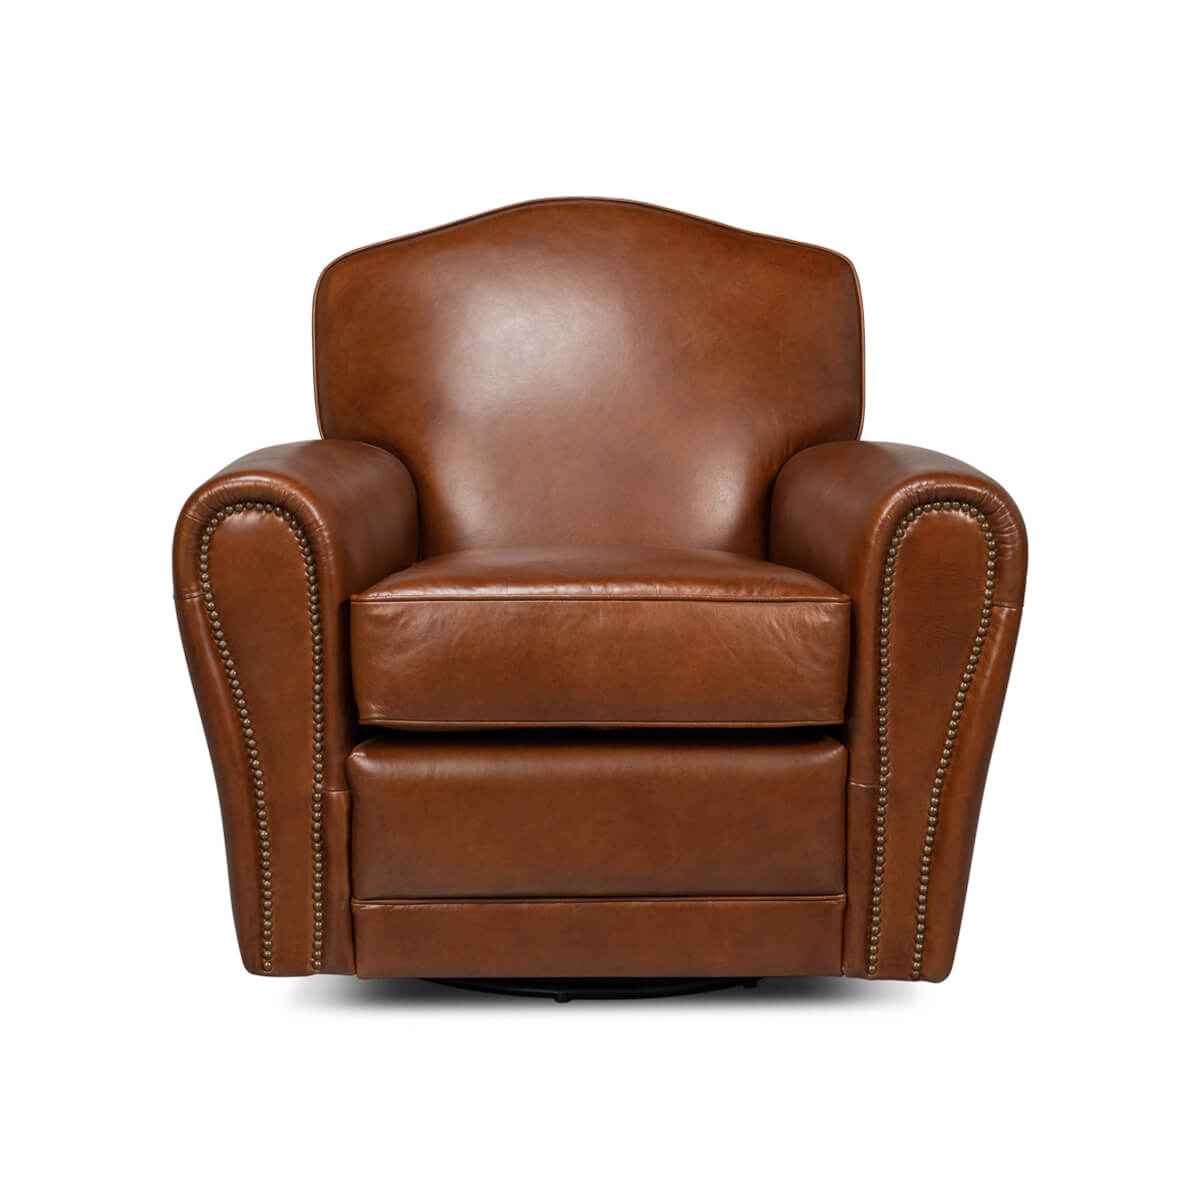 French Art Deco Style Leather Club Chair - English Georgian America